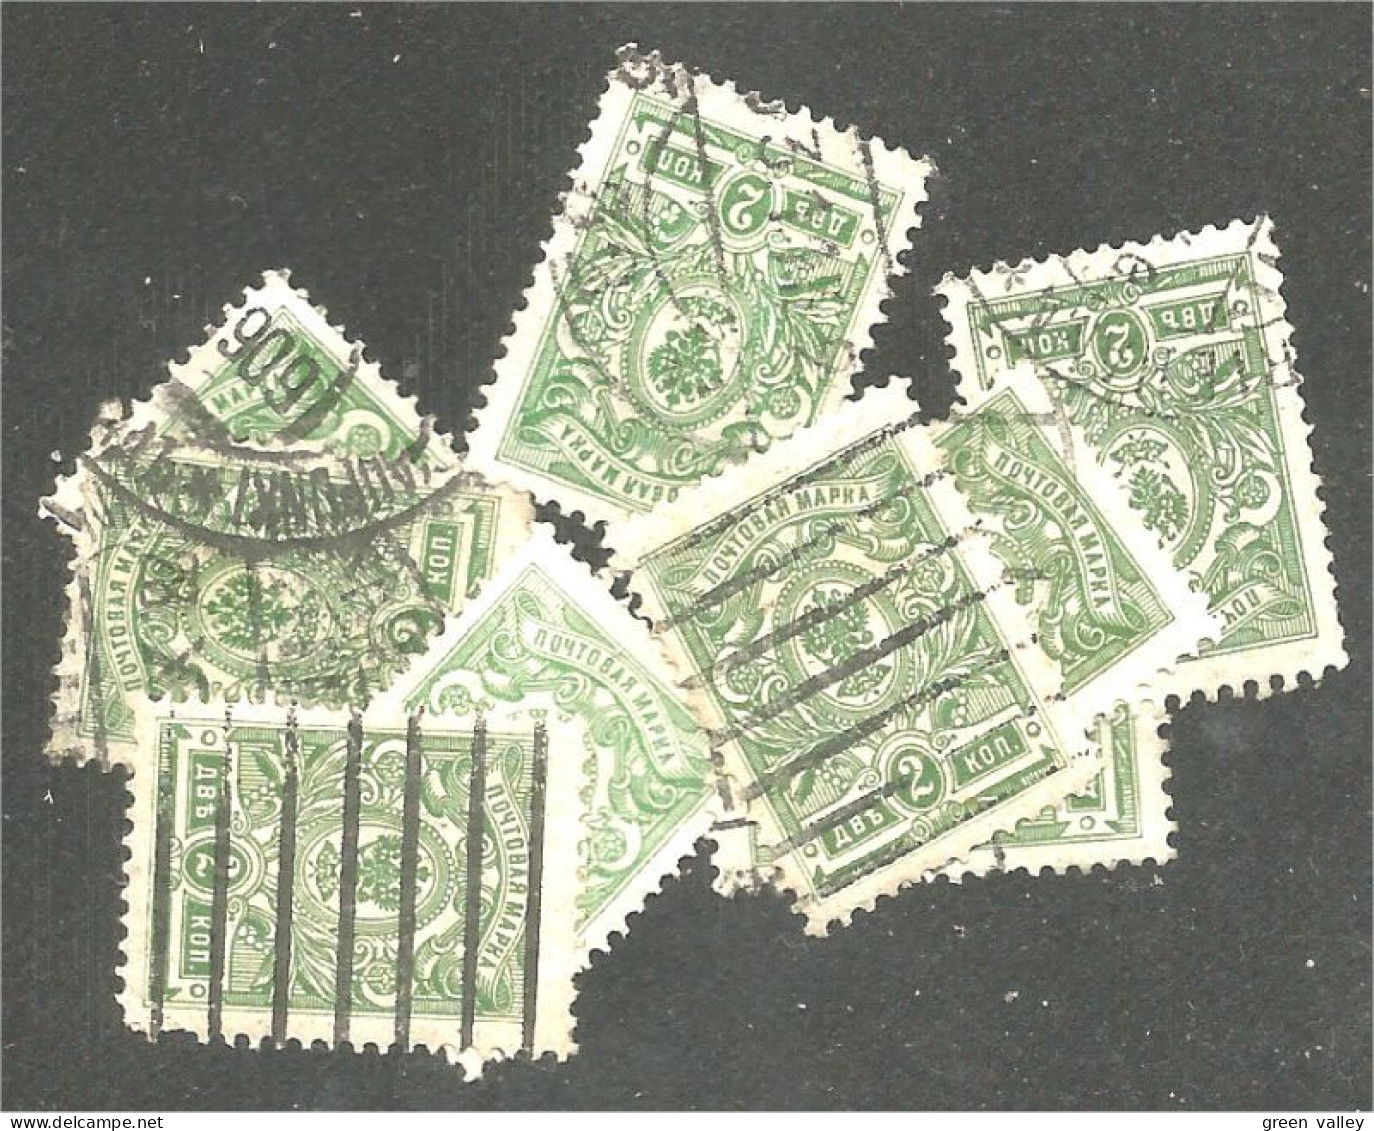 771 Russie 2k 1909 9 Stamps Green Vert Aigle Imperial Eagle Post Horn Cor Postal Varnish (RUZ-352) - Oblitérés